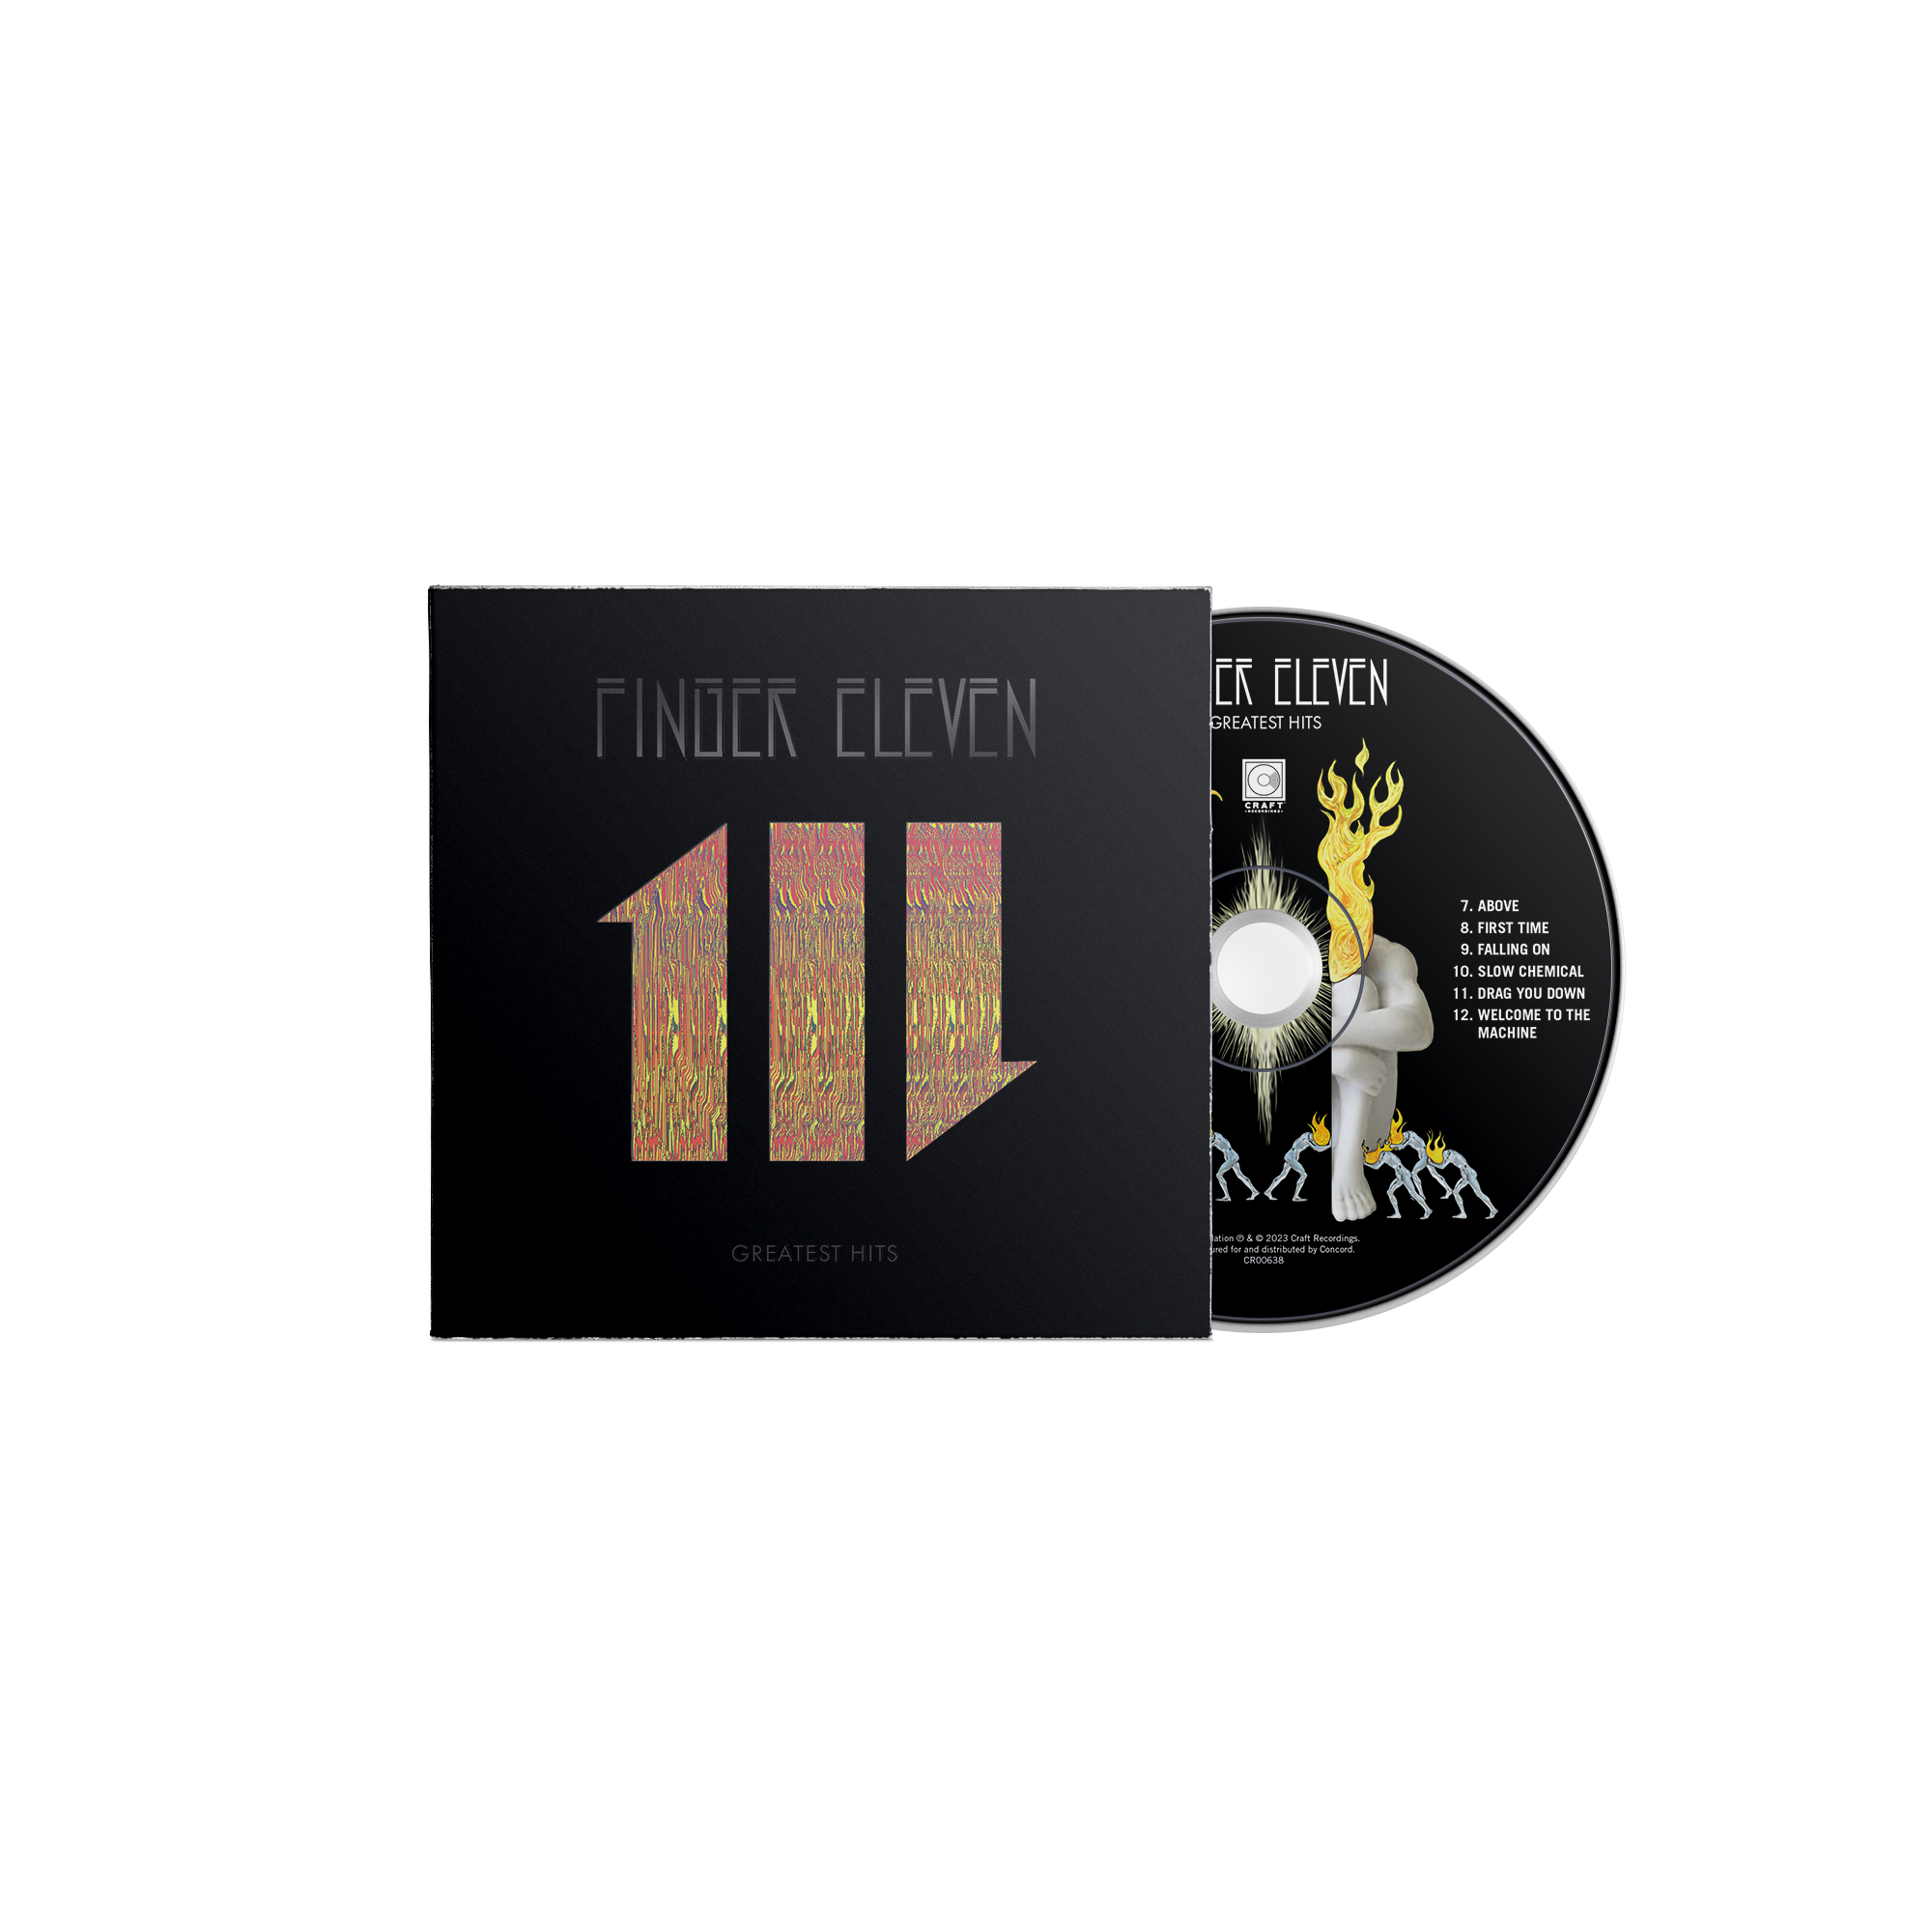 Finger Eleven - Greatest Hits: CD